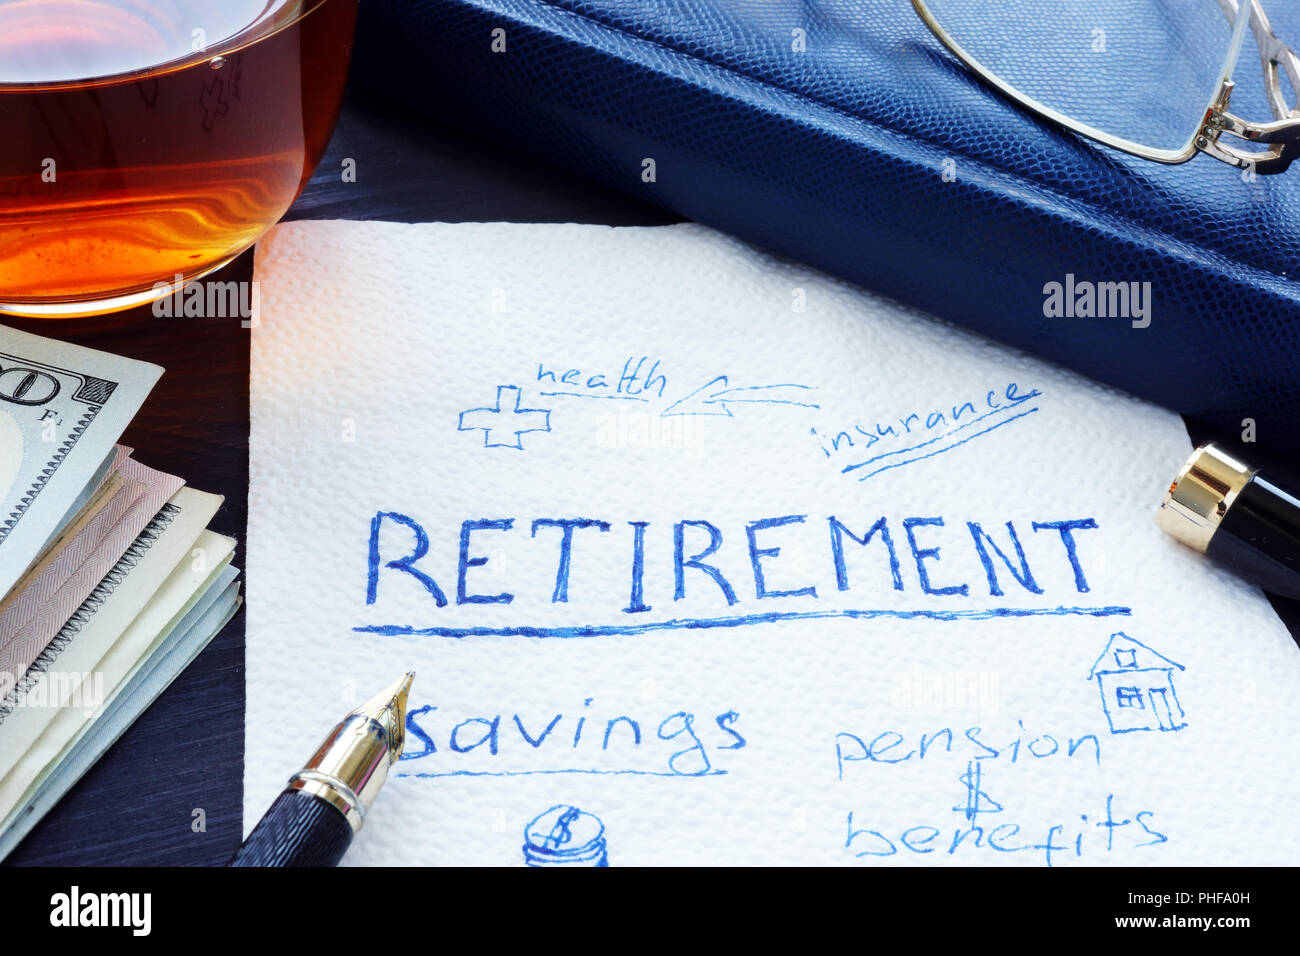 Retirement plan handwritten on a napkin. Savings for pension. Stock Photo